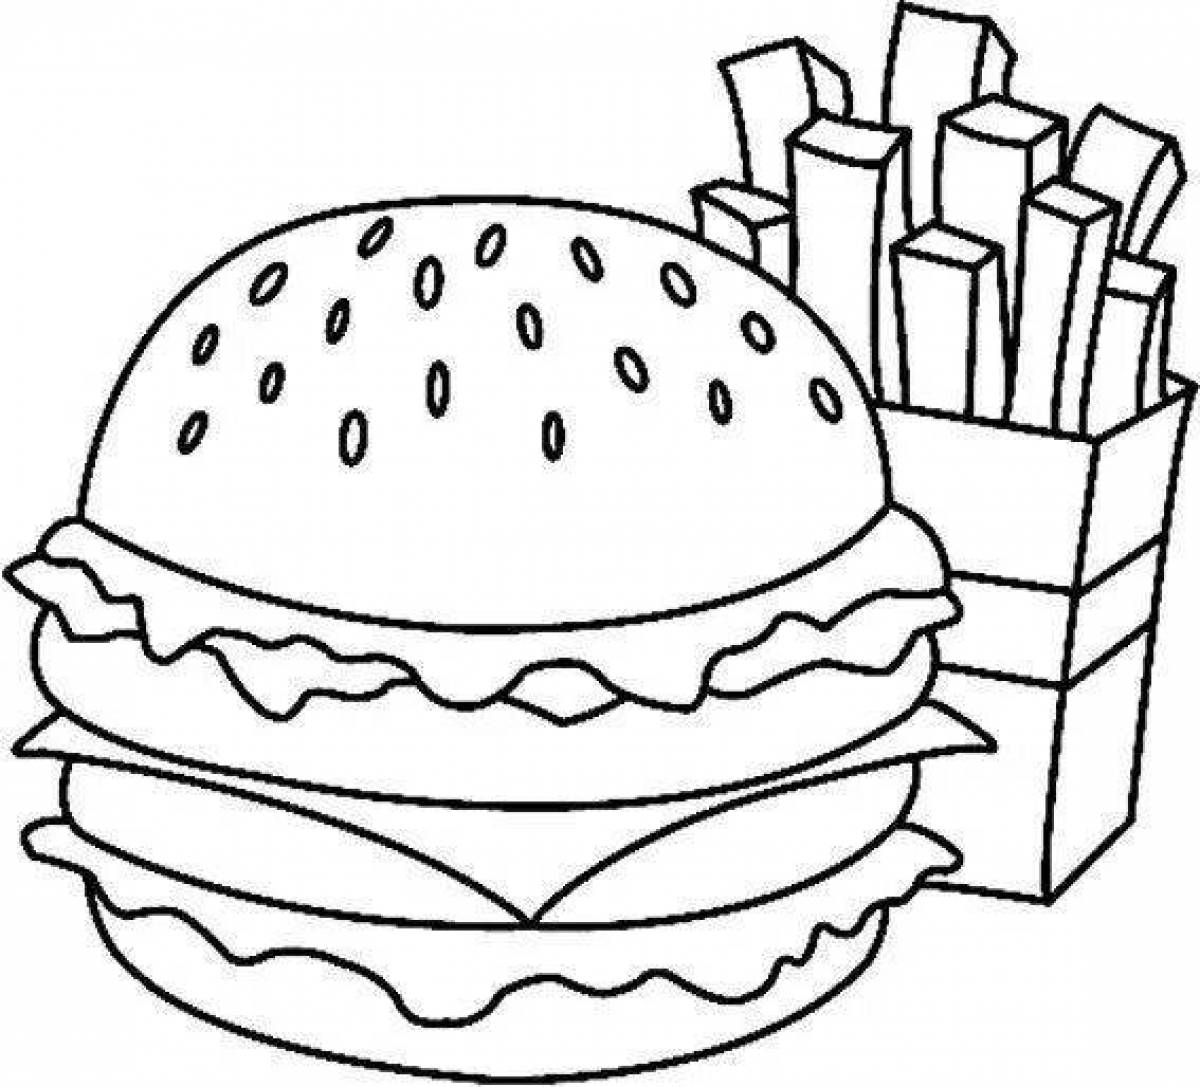 Joyful burger king coloring page